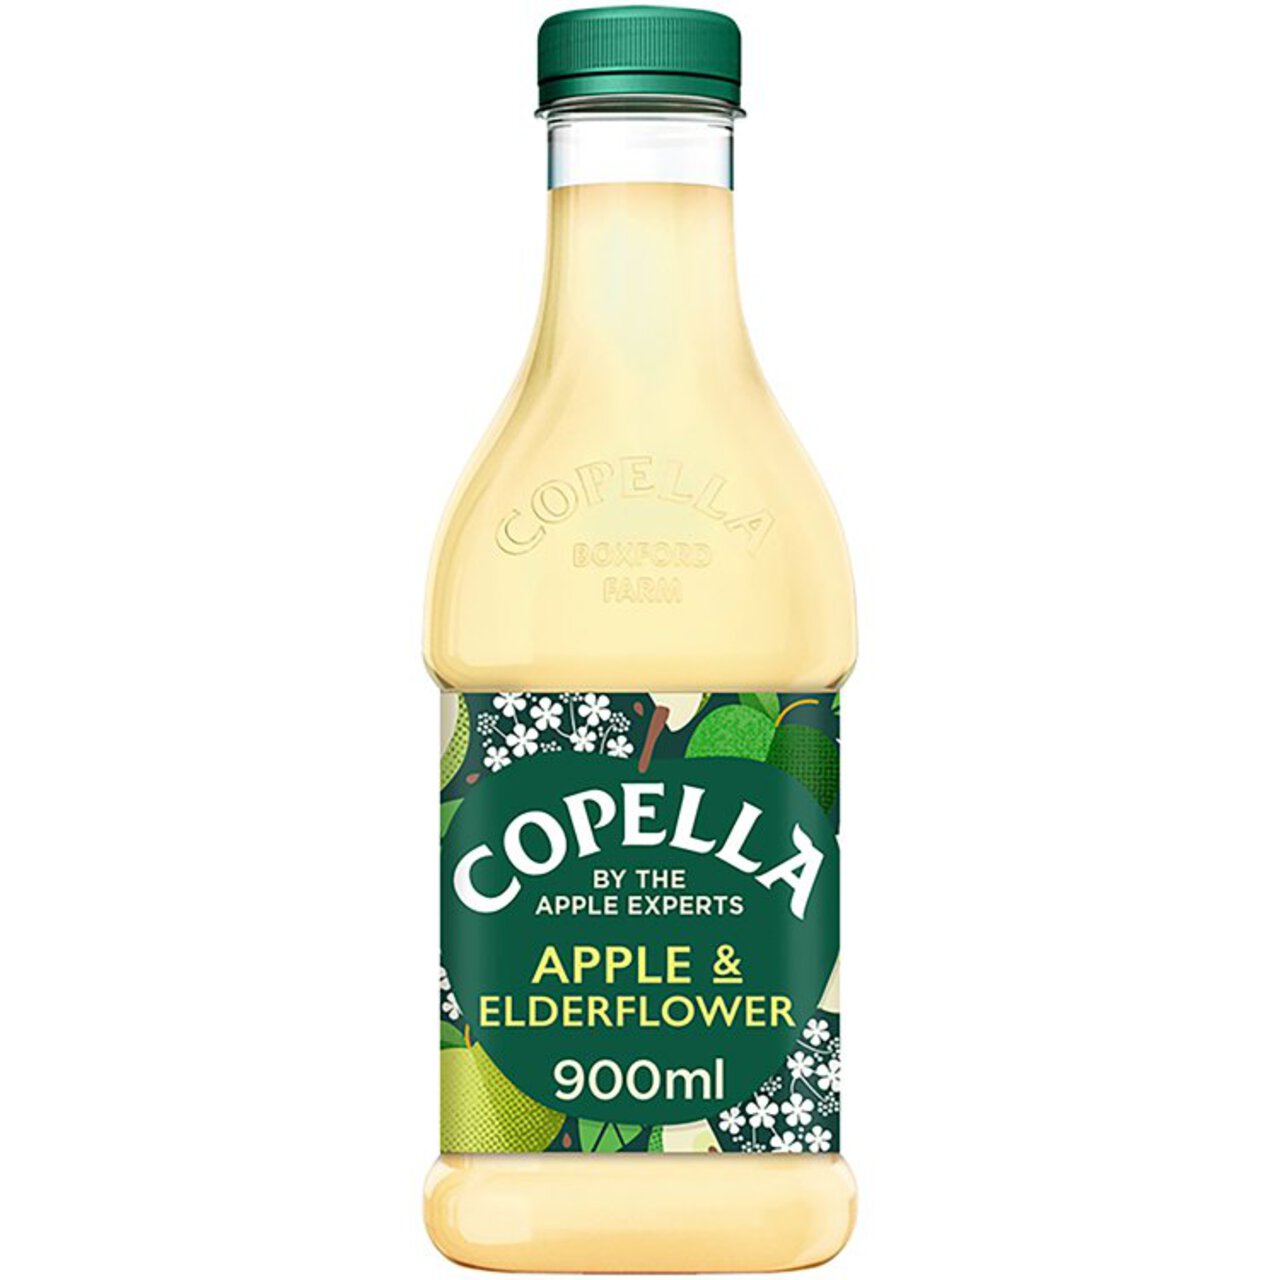 Copella Apple & Elderflower Fruit Juice 900ml